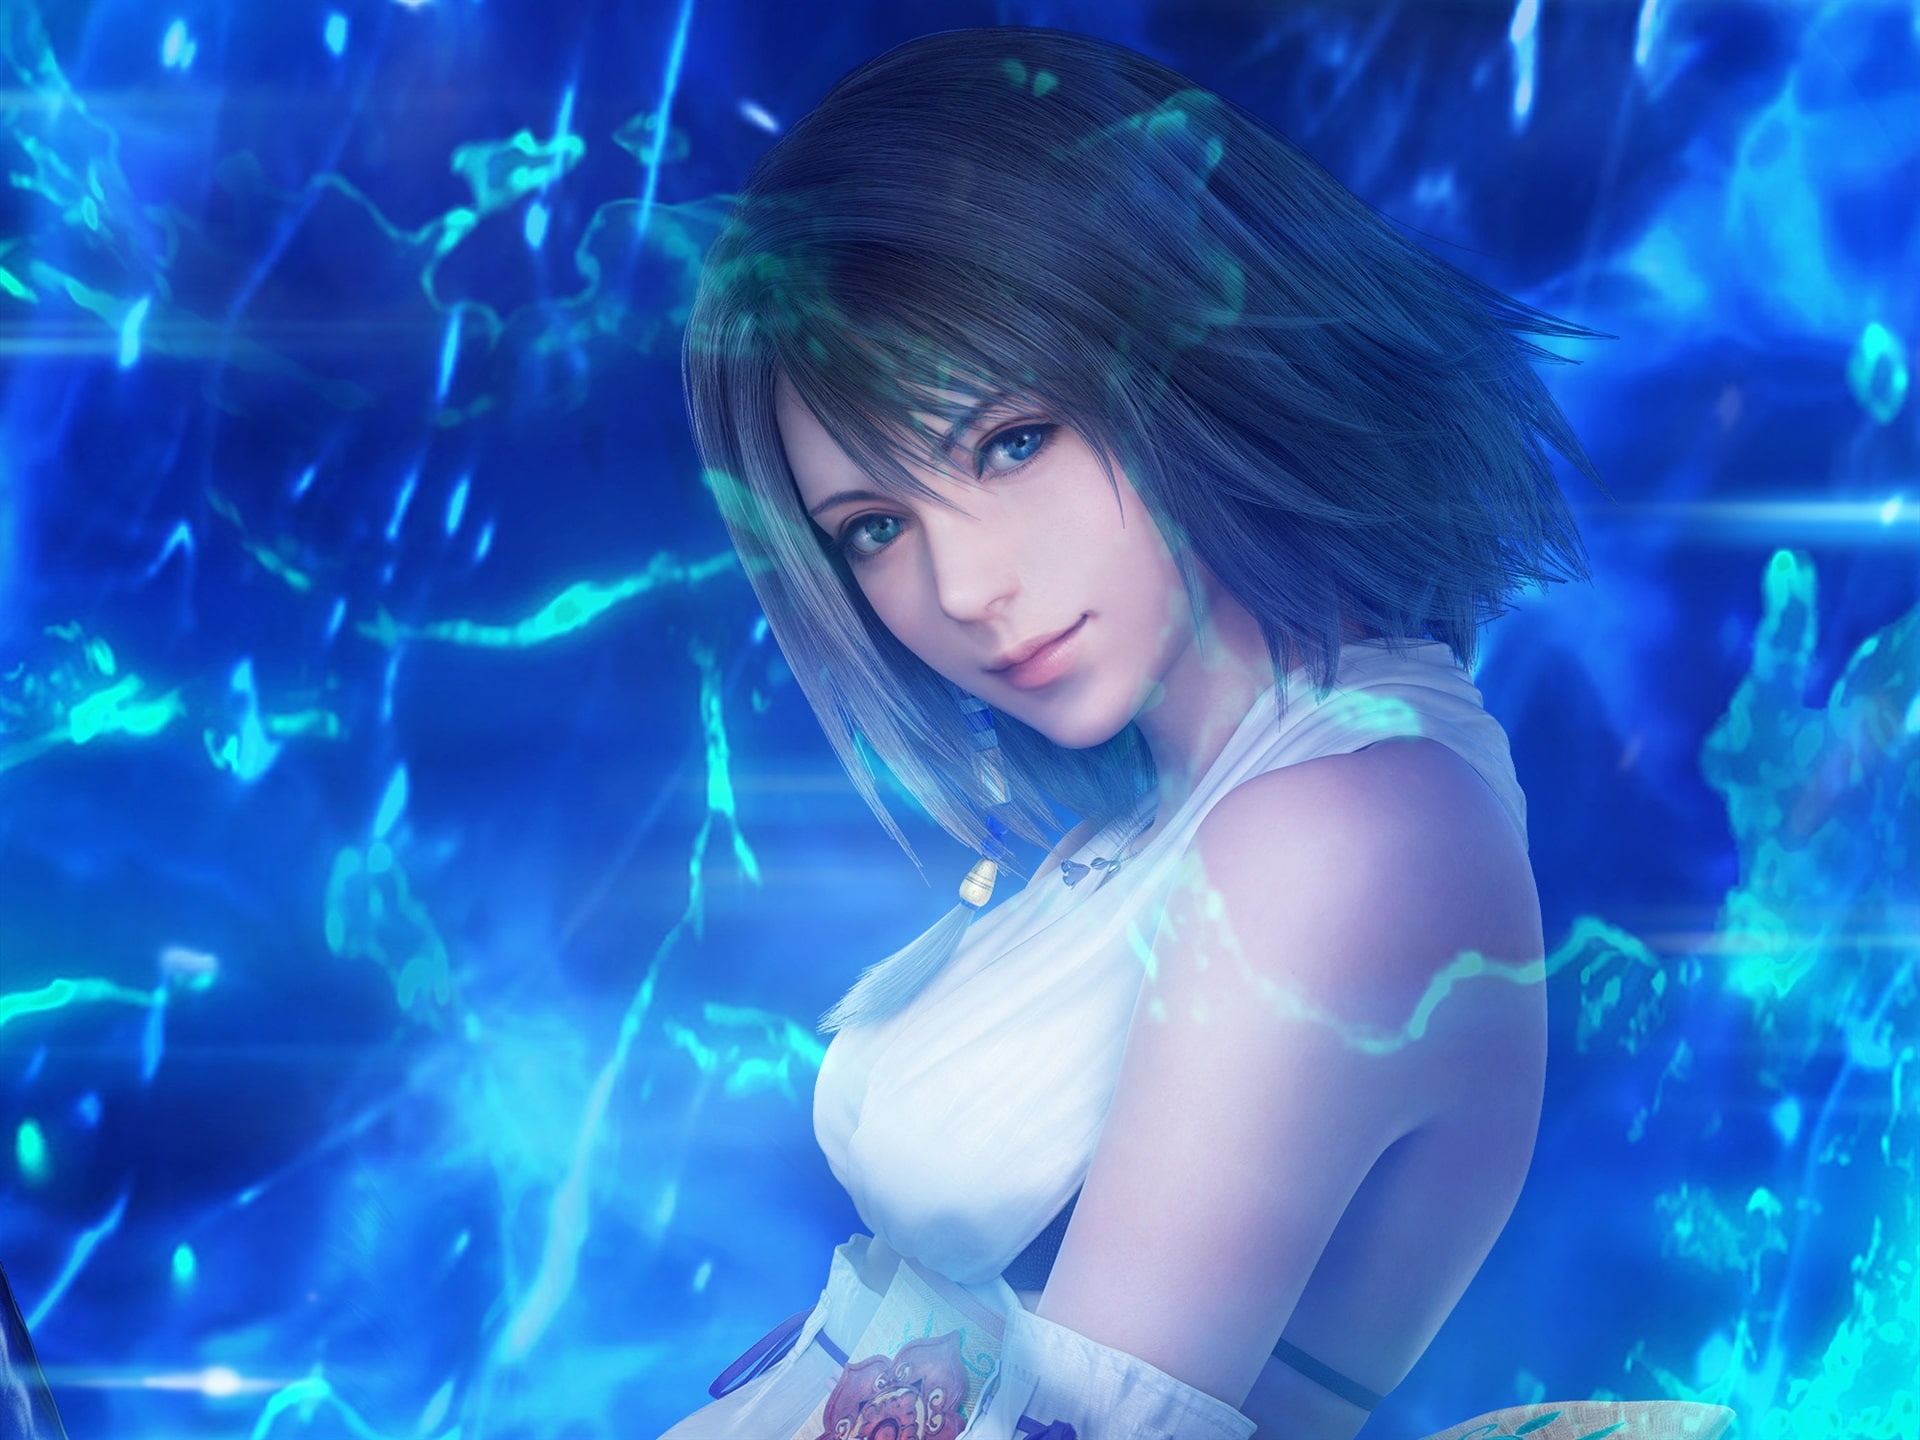 Final Fantasy, short hair girl, blue background, final fantasy movie